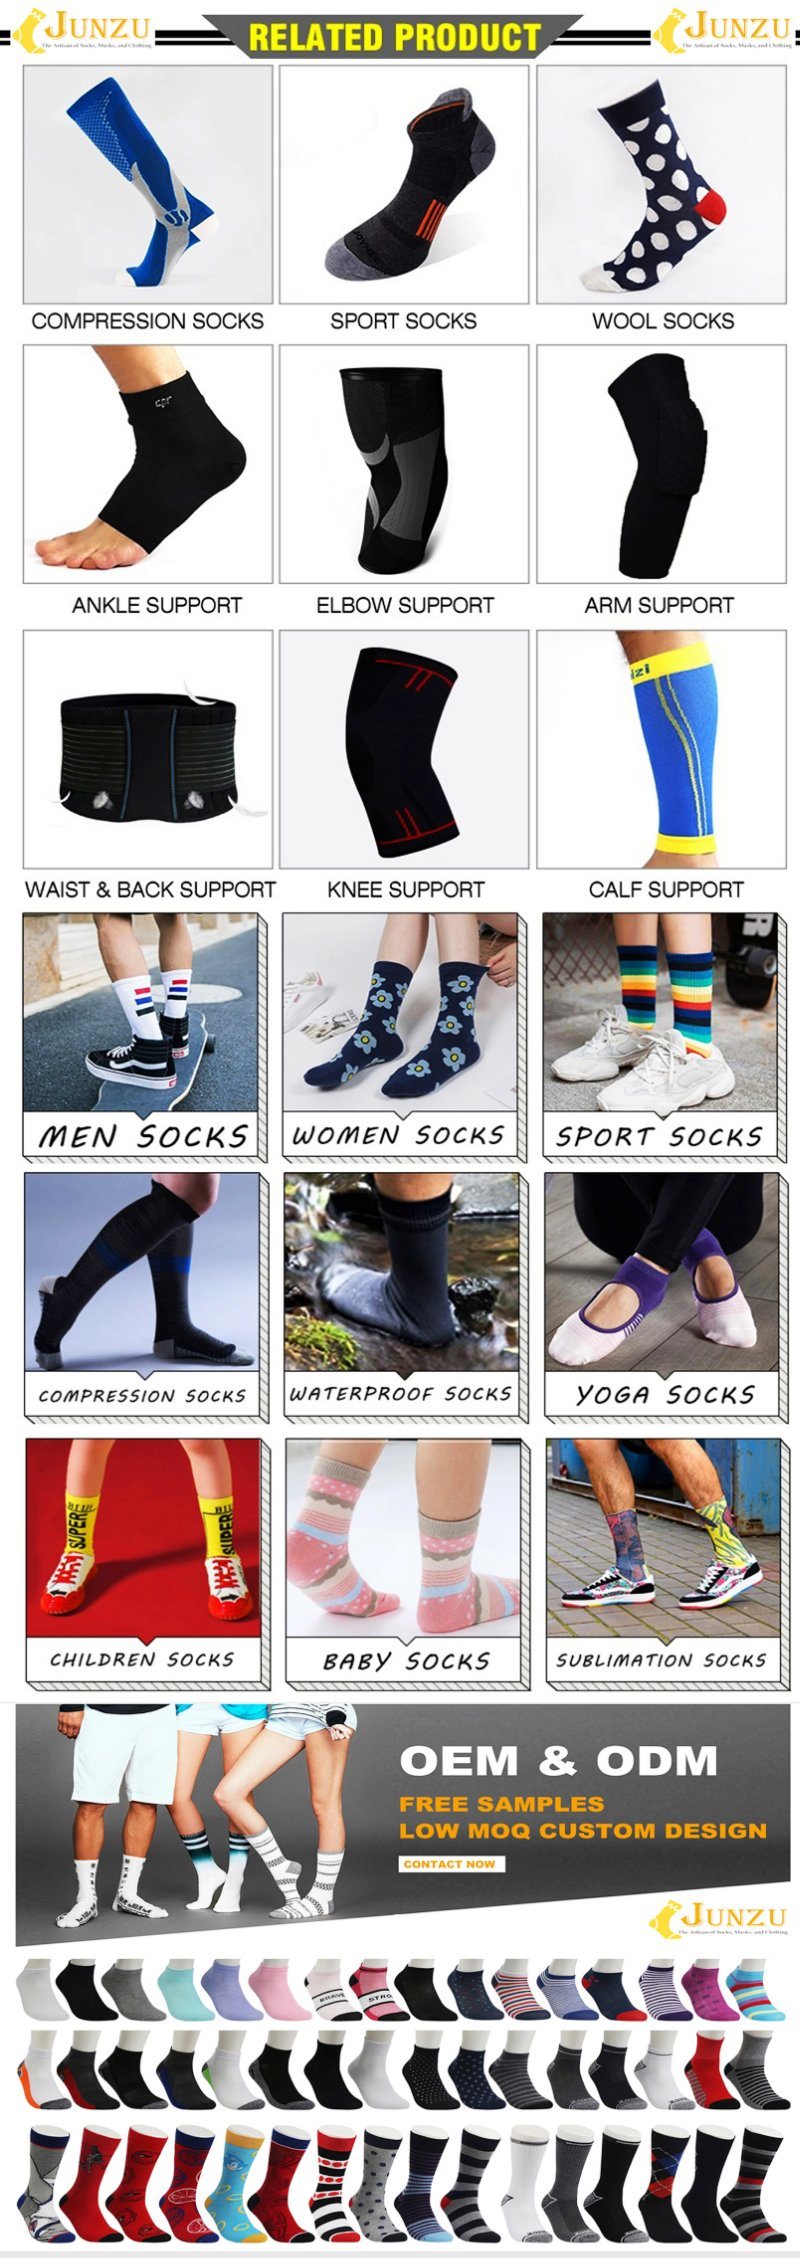 Ladies Cozy Ruffle Sheer Mesh Ankle Socks Women Summer Thin Transparent Crystal Lace Socks Ankle Socks